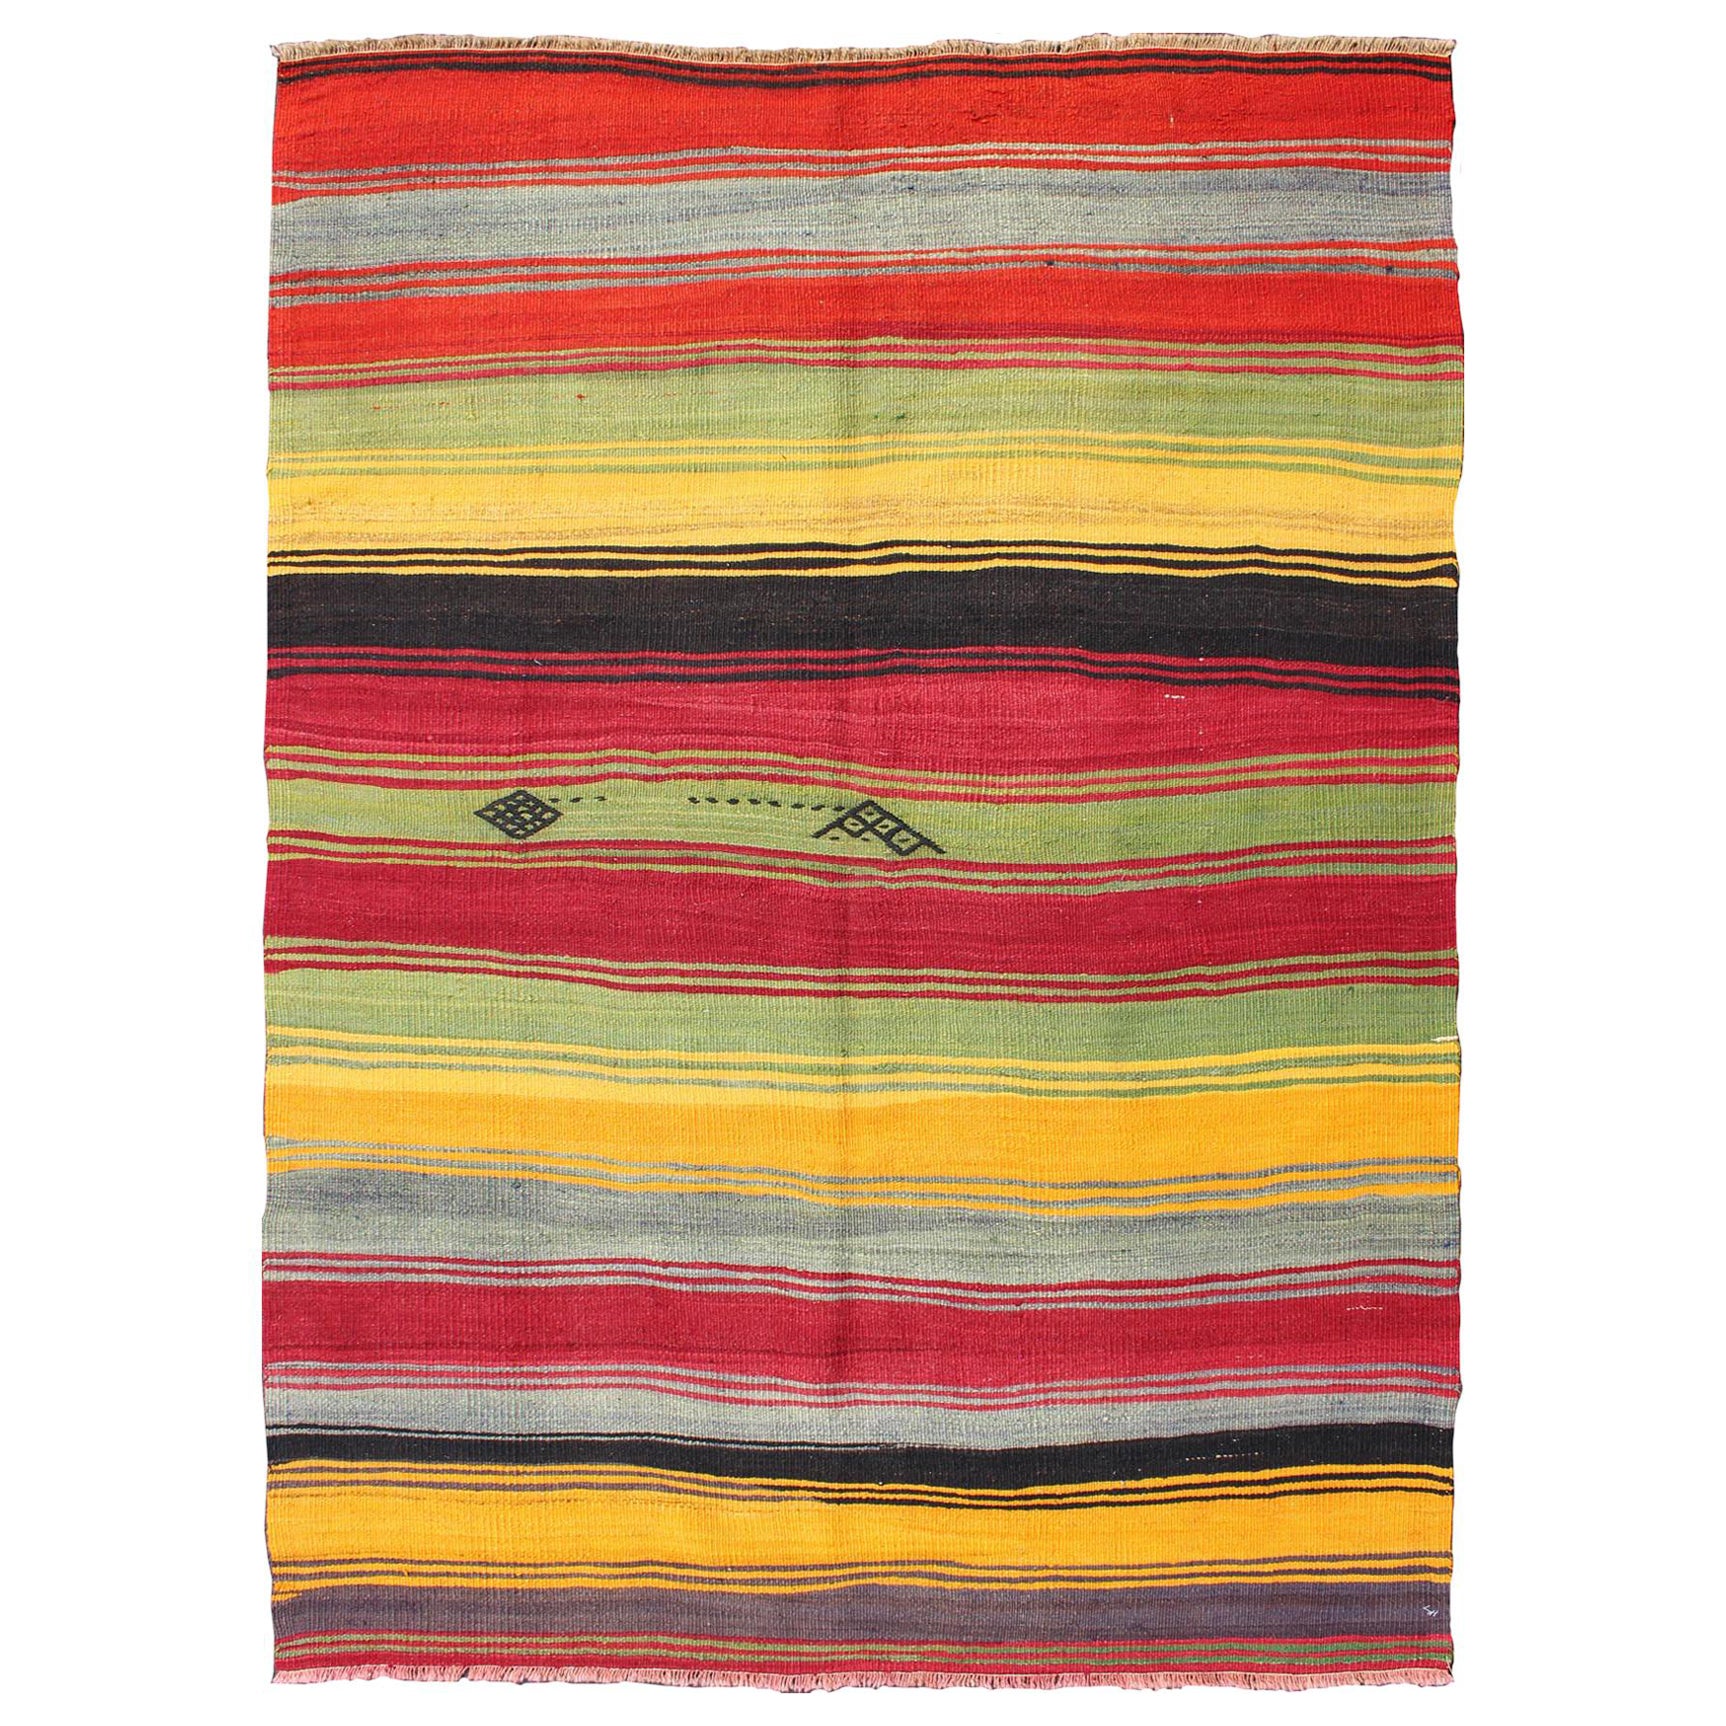 Bright & Colorful Vintage Turkish Kilim Rug in Stripes Design with Vivid Colors